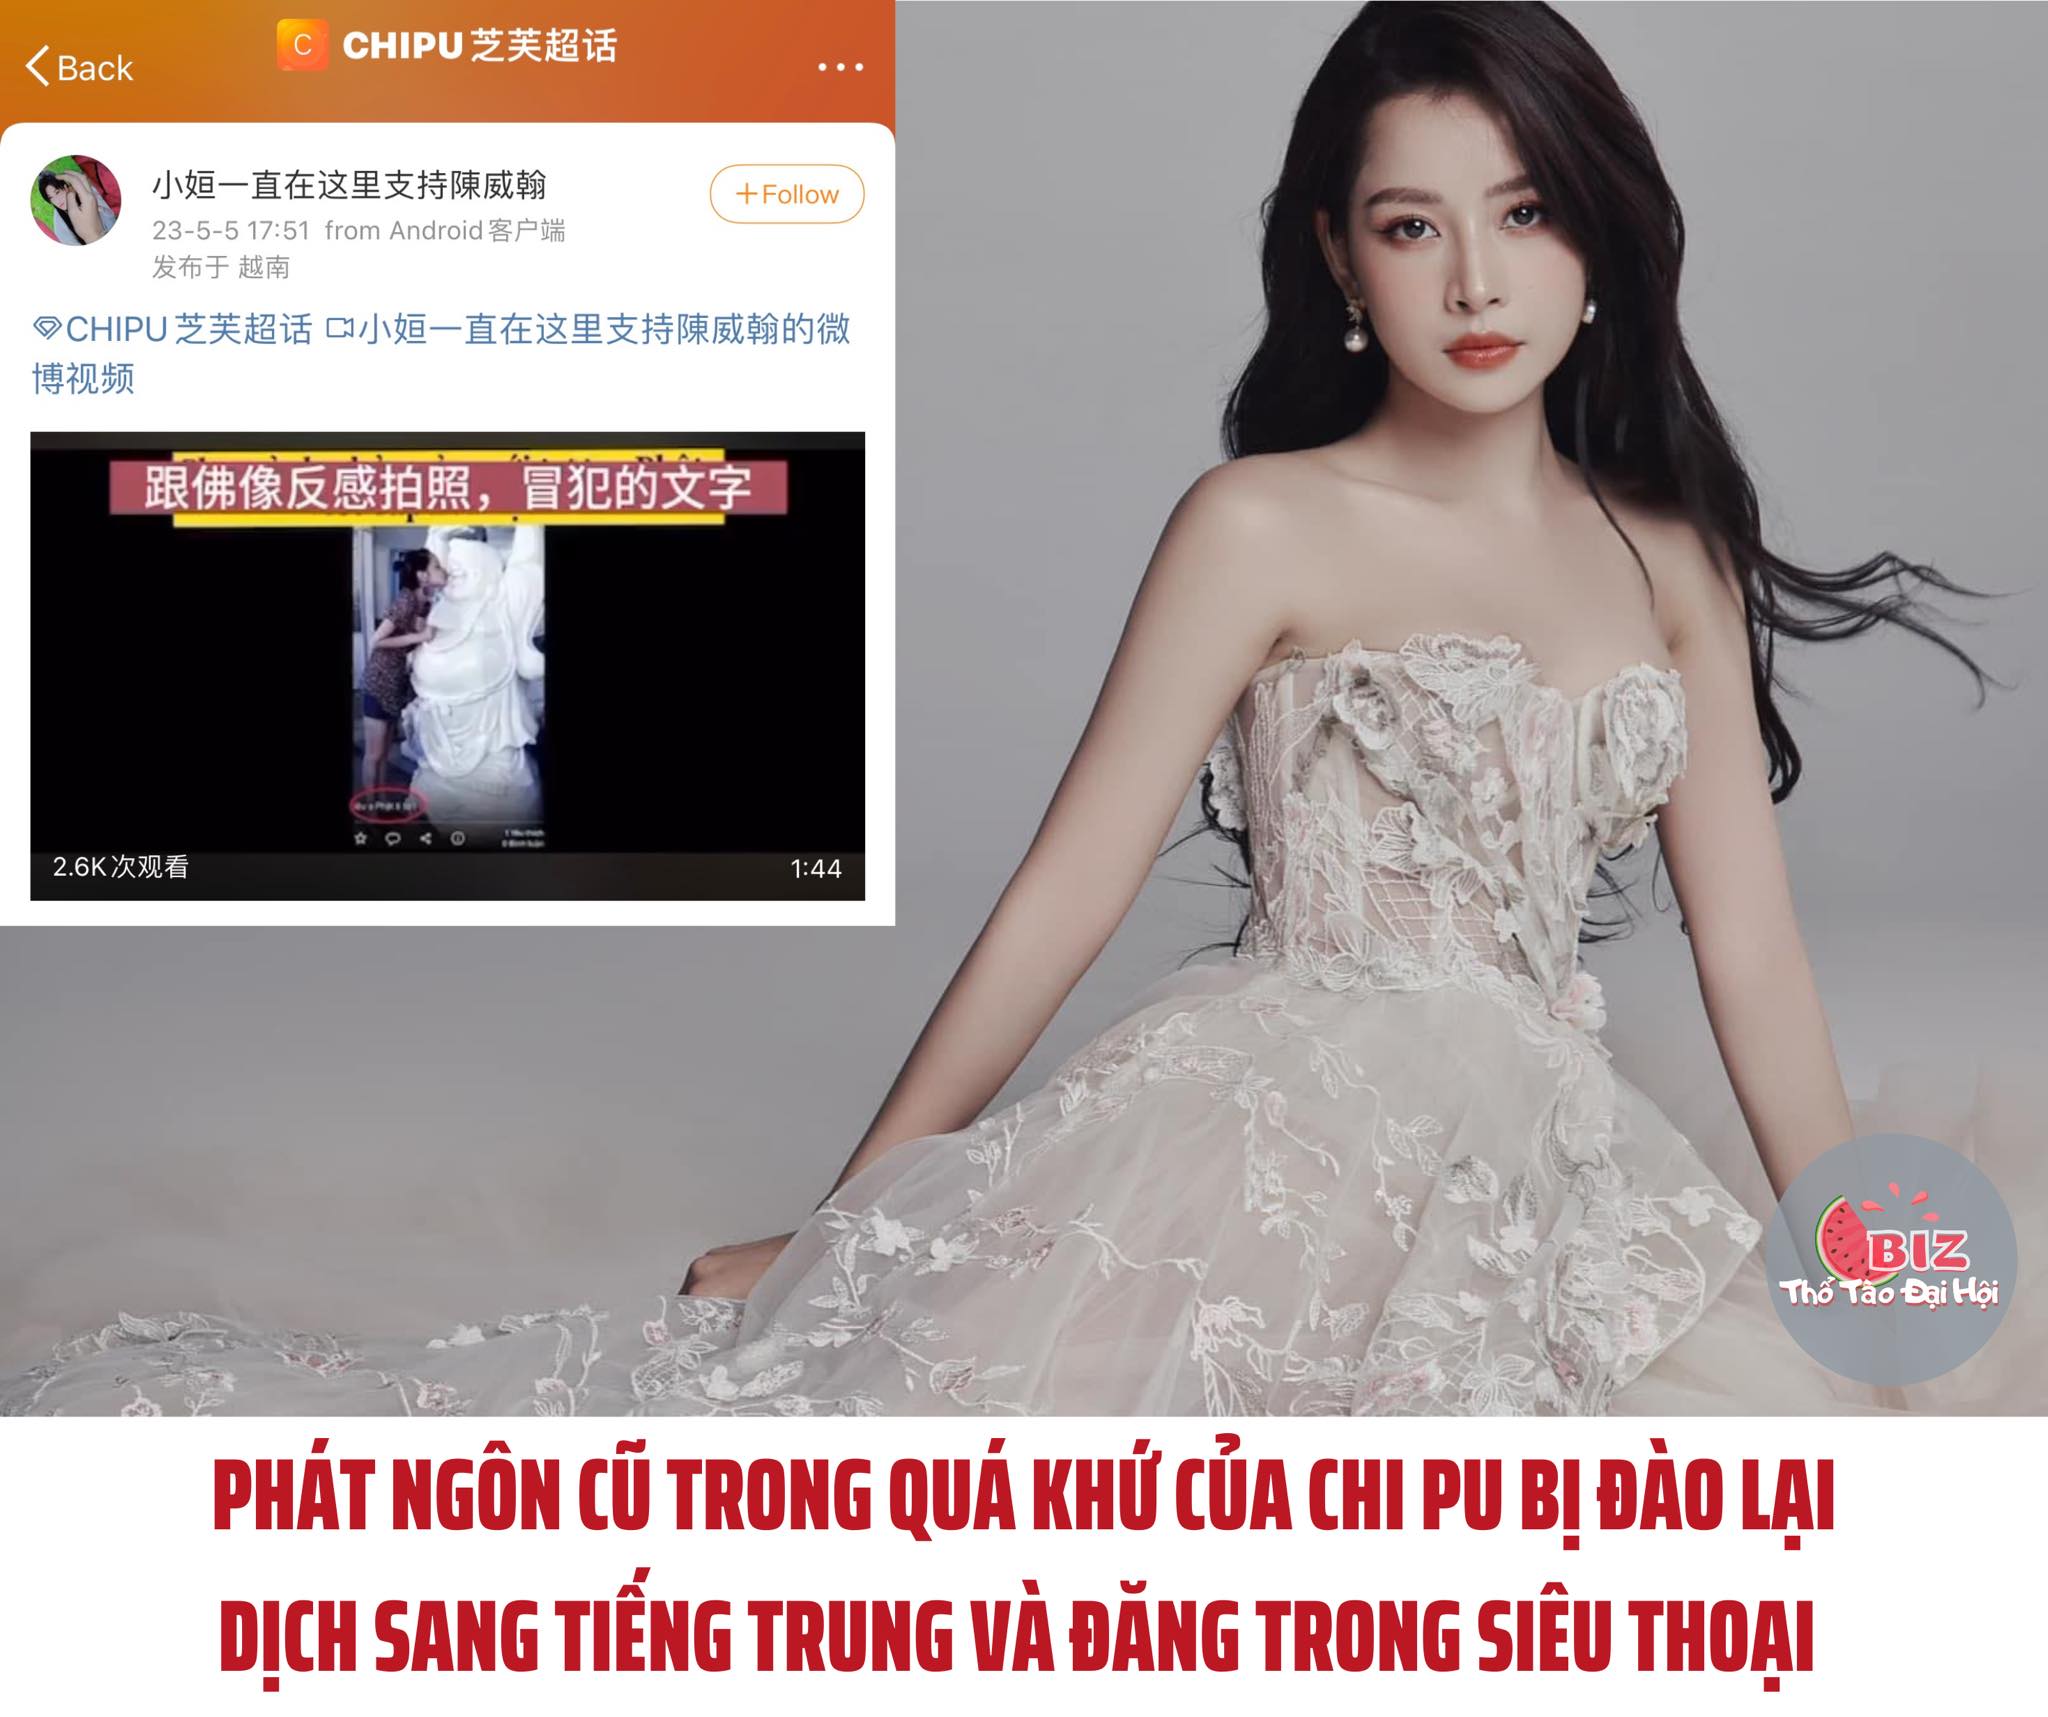 Netizen Việt Nam sang Weibo "bóc phốt" Chipu (Ảnh: Internet)